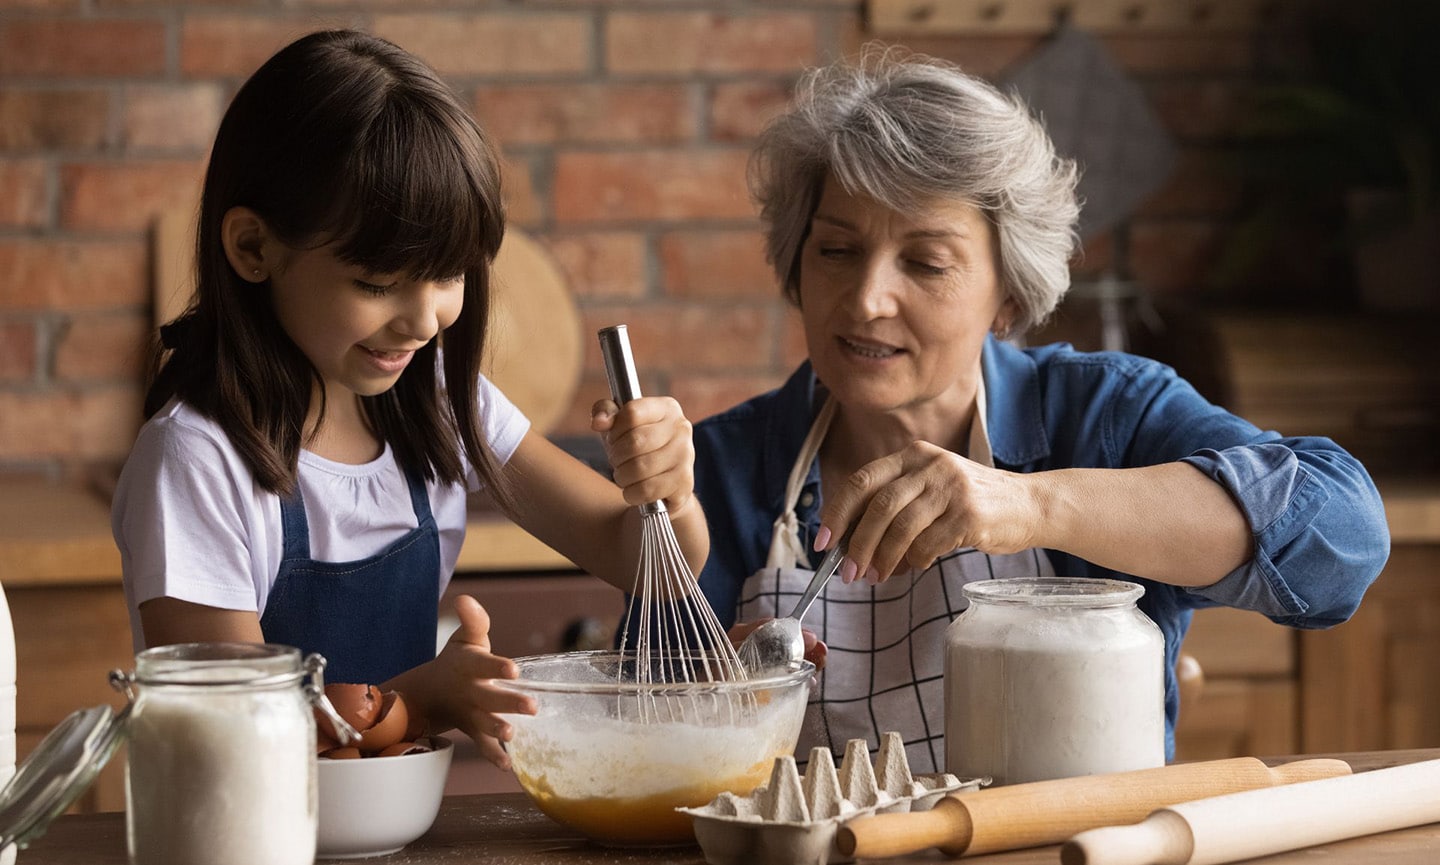 Grandparent baking with her grandchild